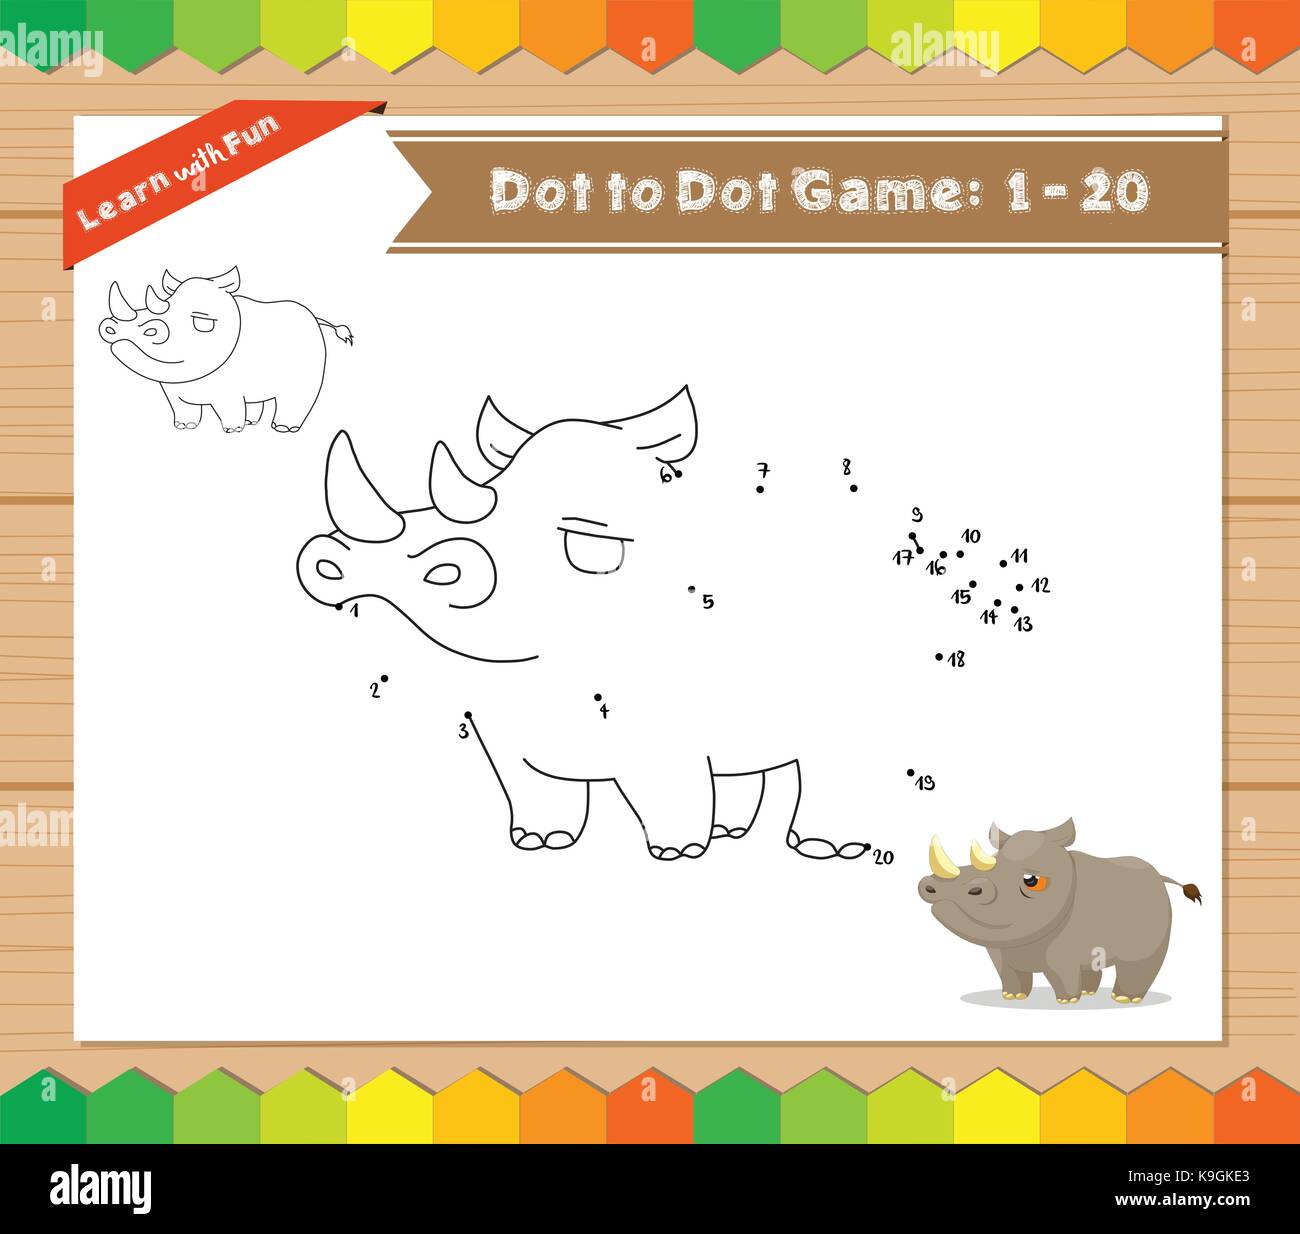 Cartoon Rhino. Dot to dot educational game for kids Stock Vector